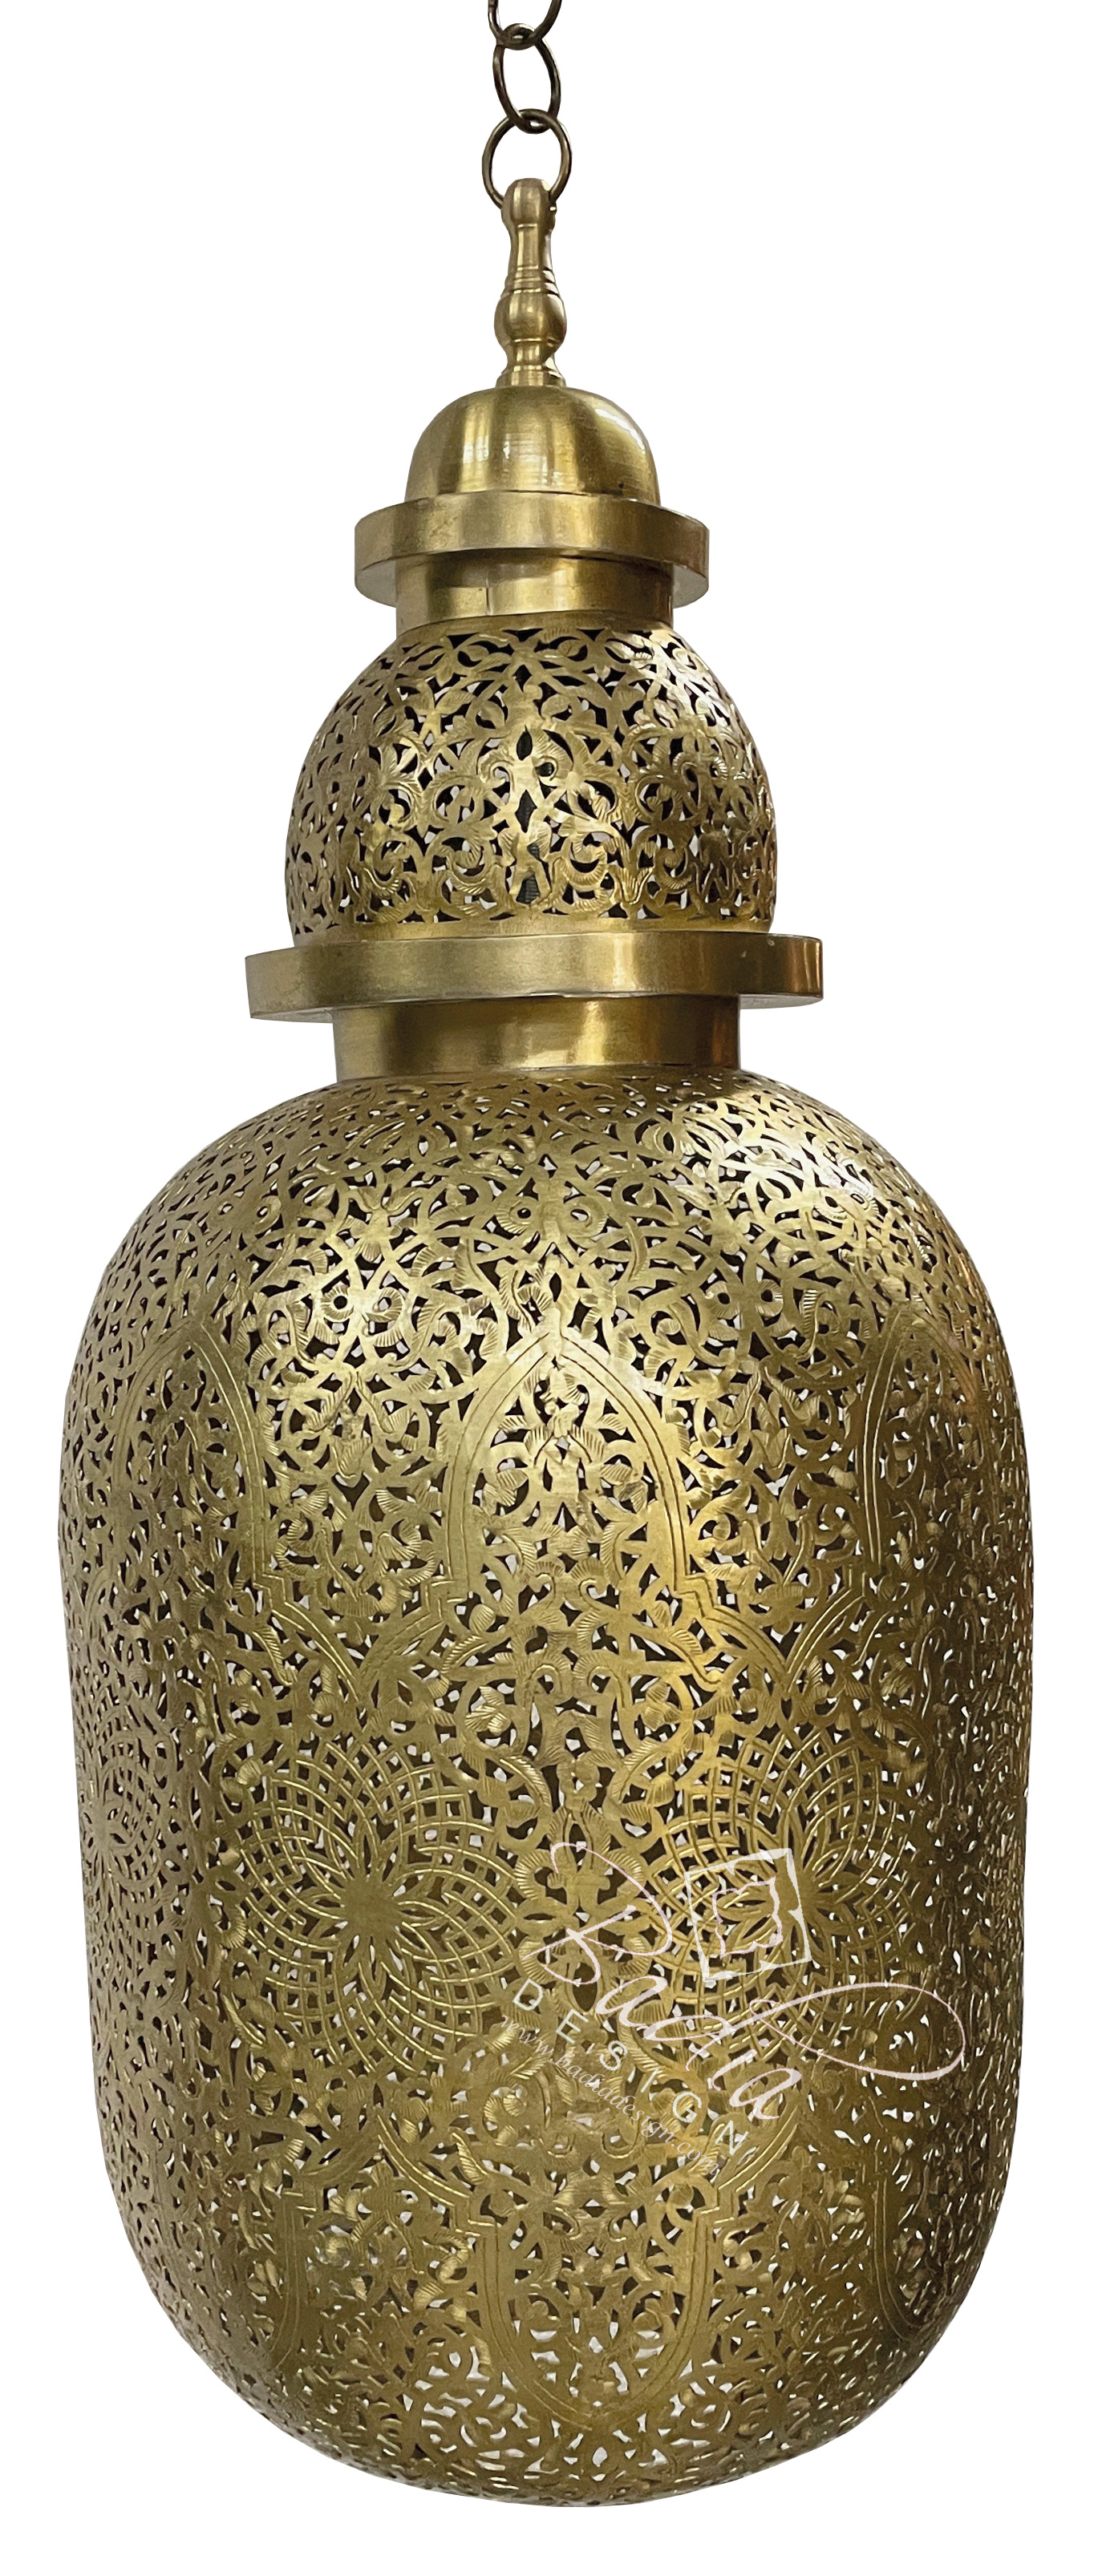 moroccan-brass-chandelier-with-intricate-patterns-ch340.jpg